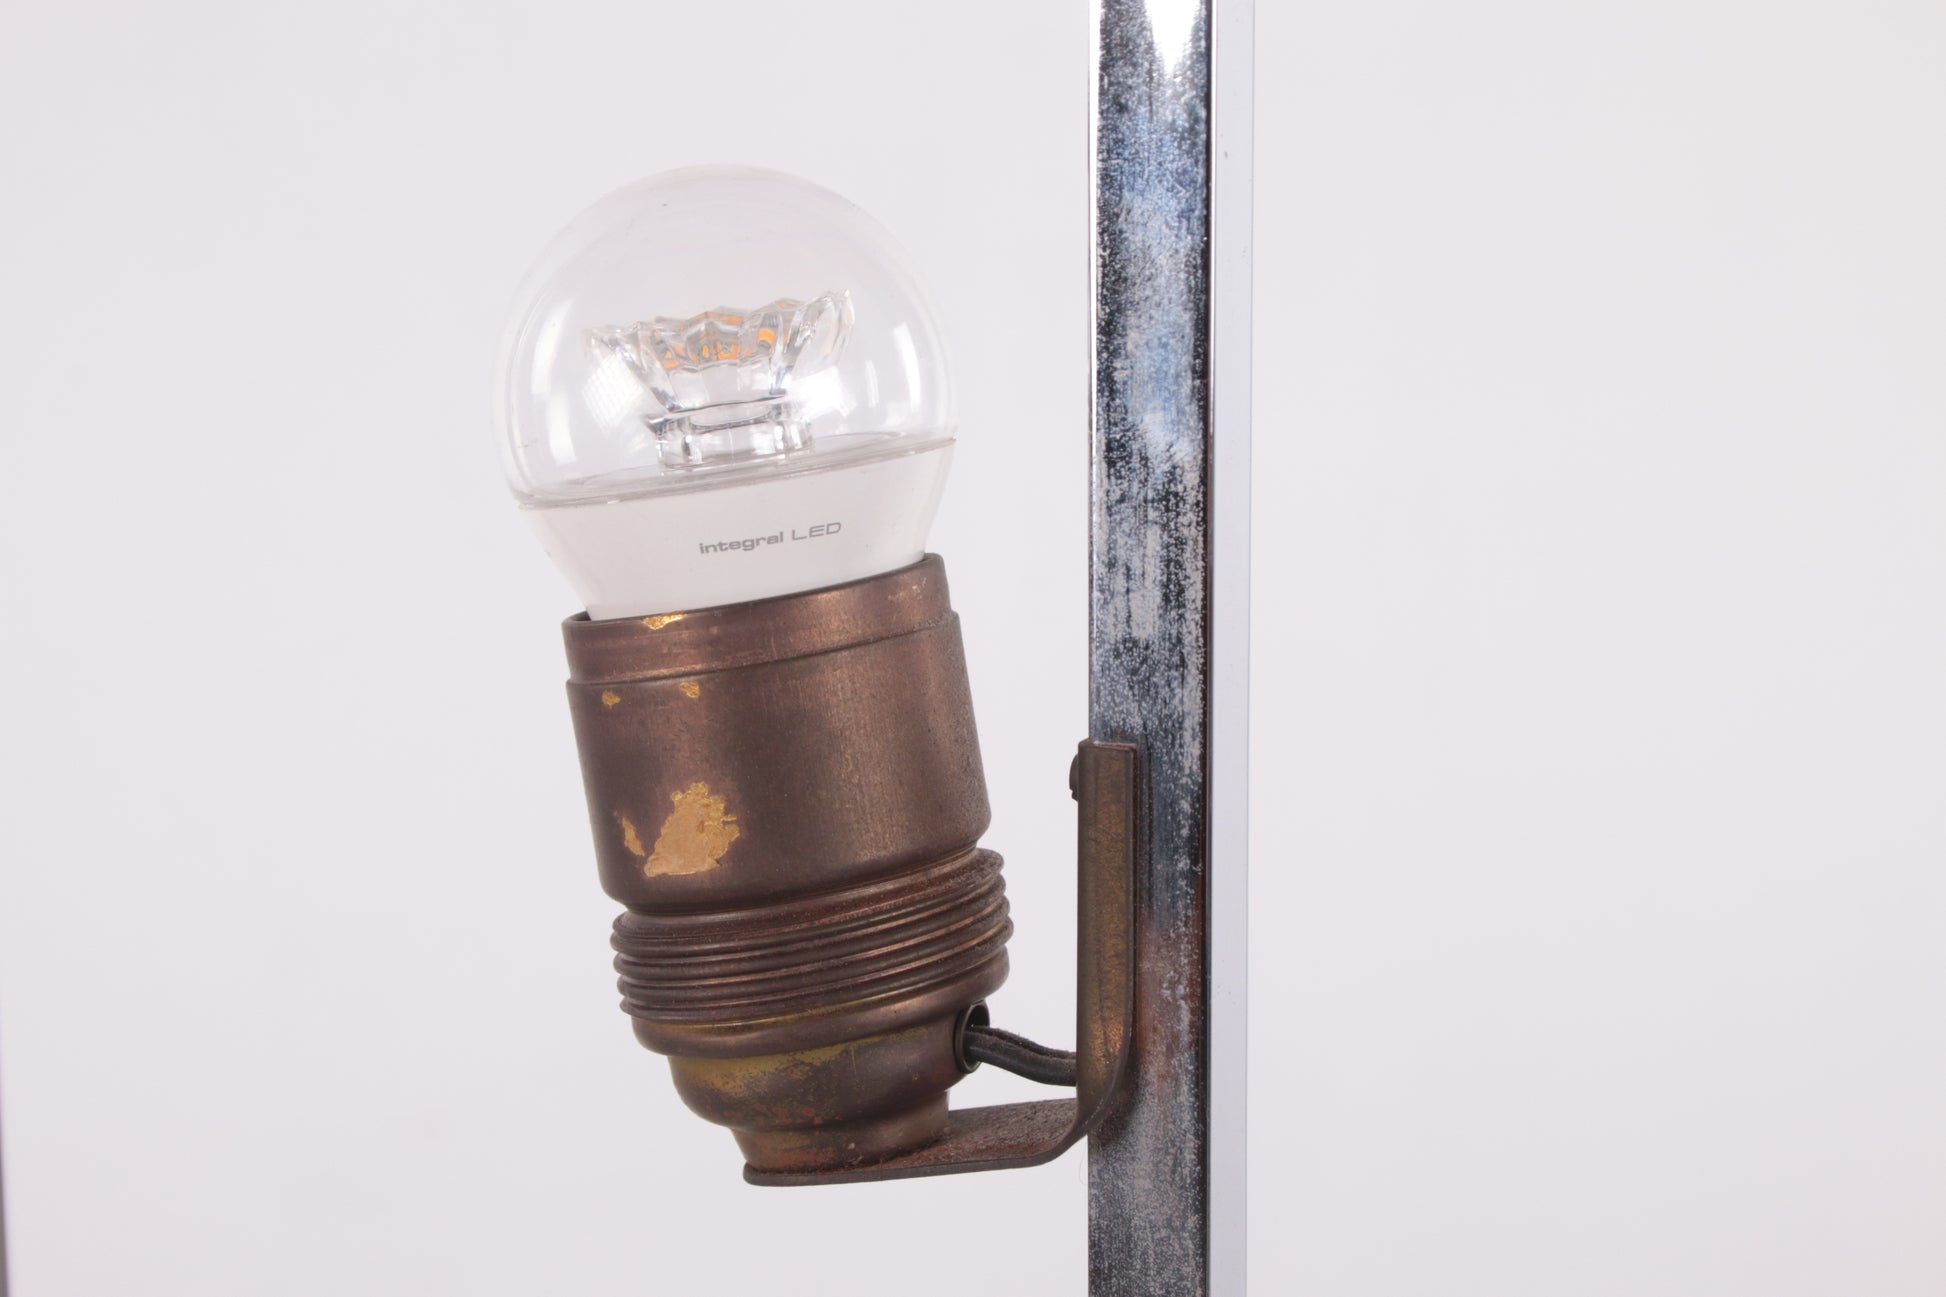 Vintage Vloerlamp met chrome en rechte kap detail lampje